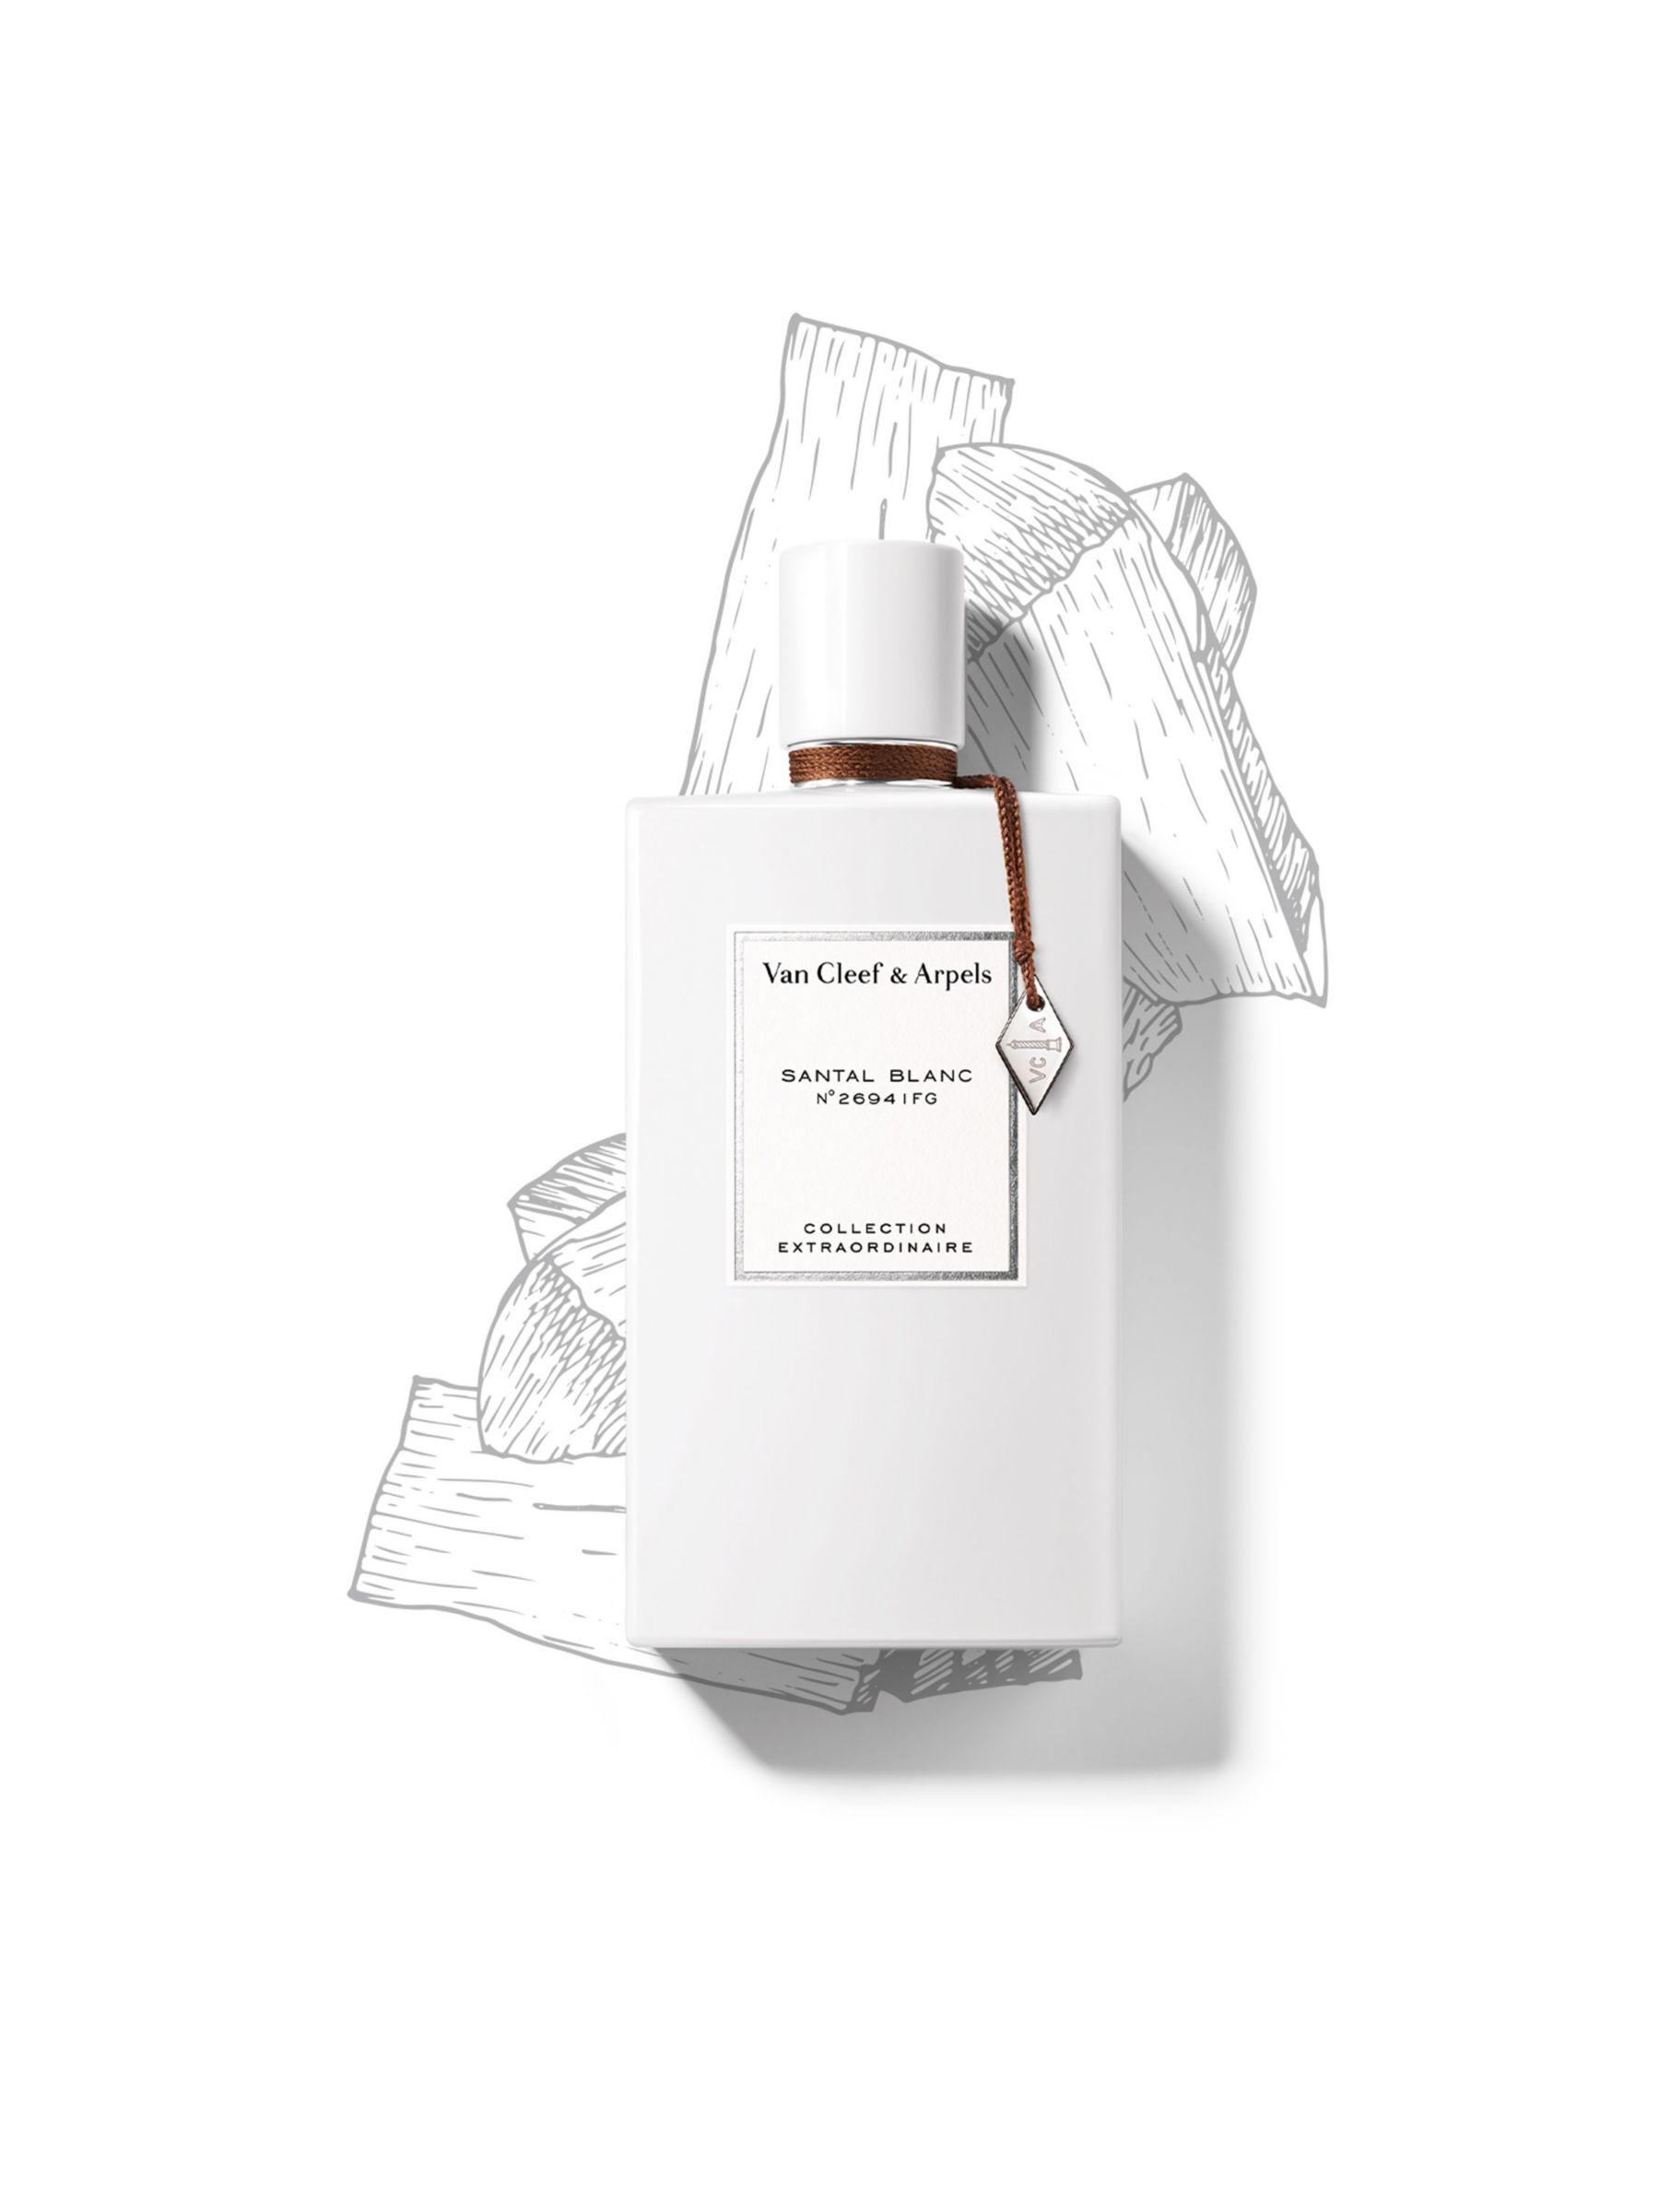 Van Cleef and Arpels Collection Extraordinaire Eau de Parfum Fragrance Gift Set, 3 x 45ml 4